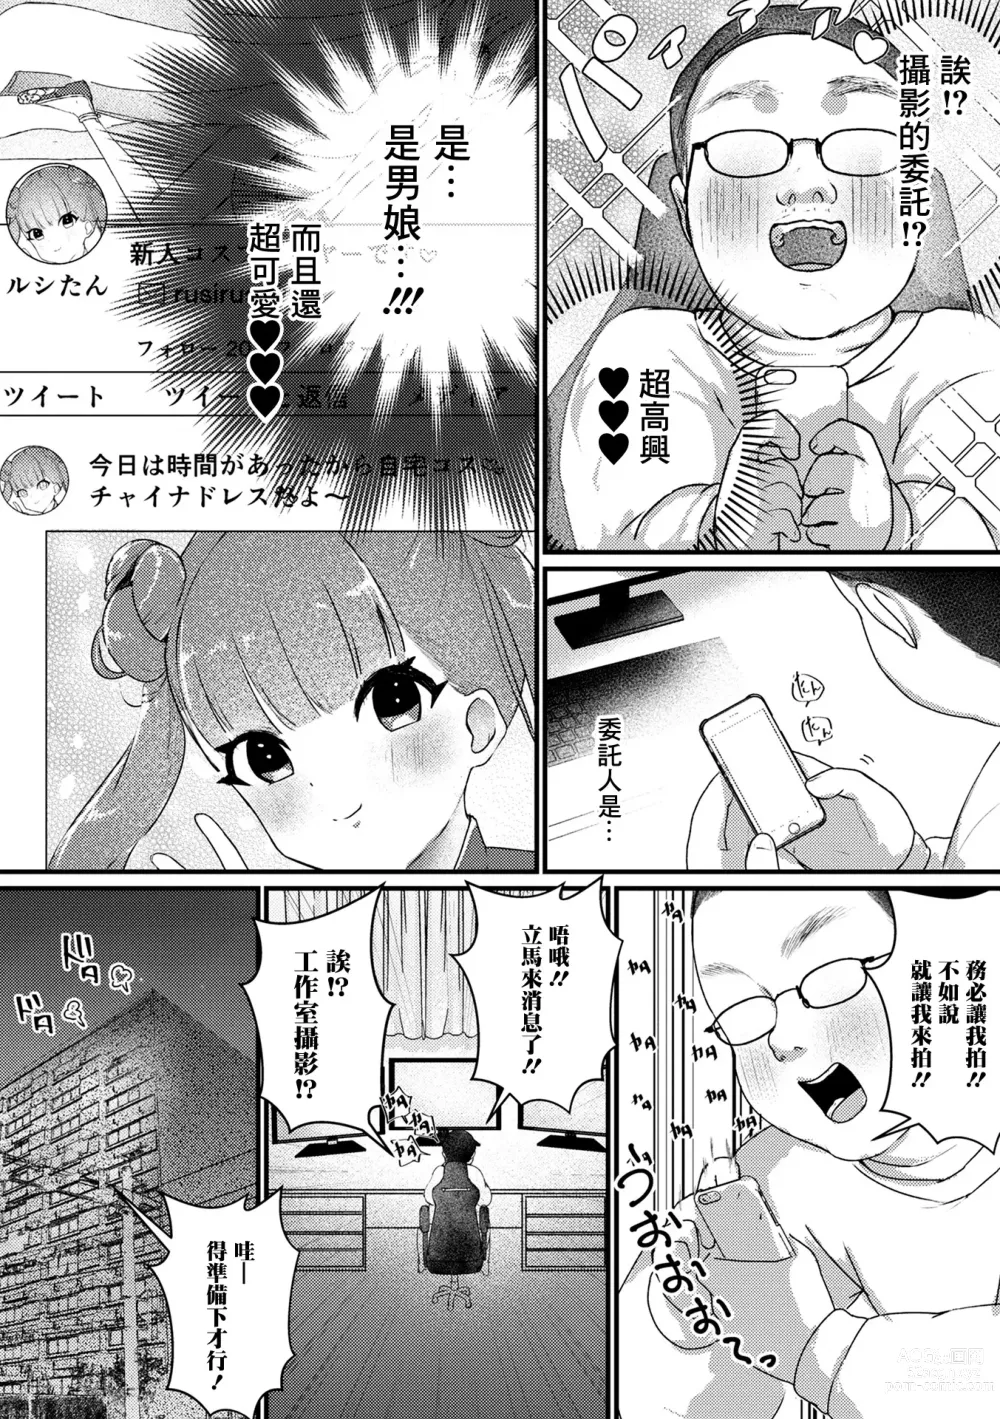 Page 2 of manga Dosukebe Otokonoko Cosplayer!